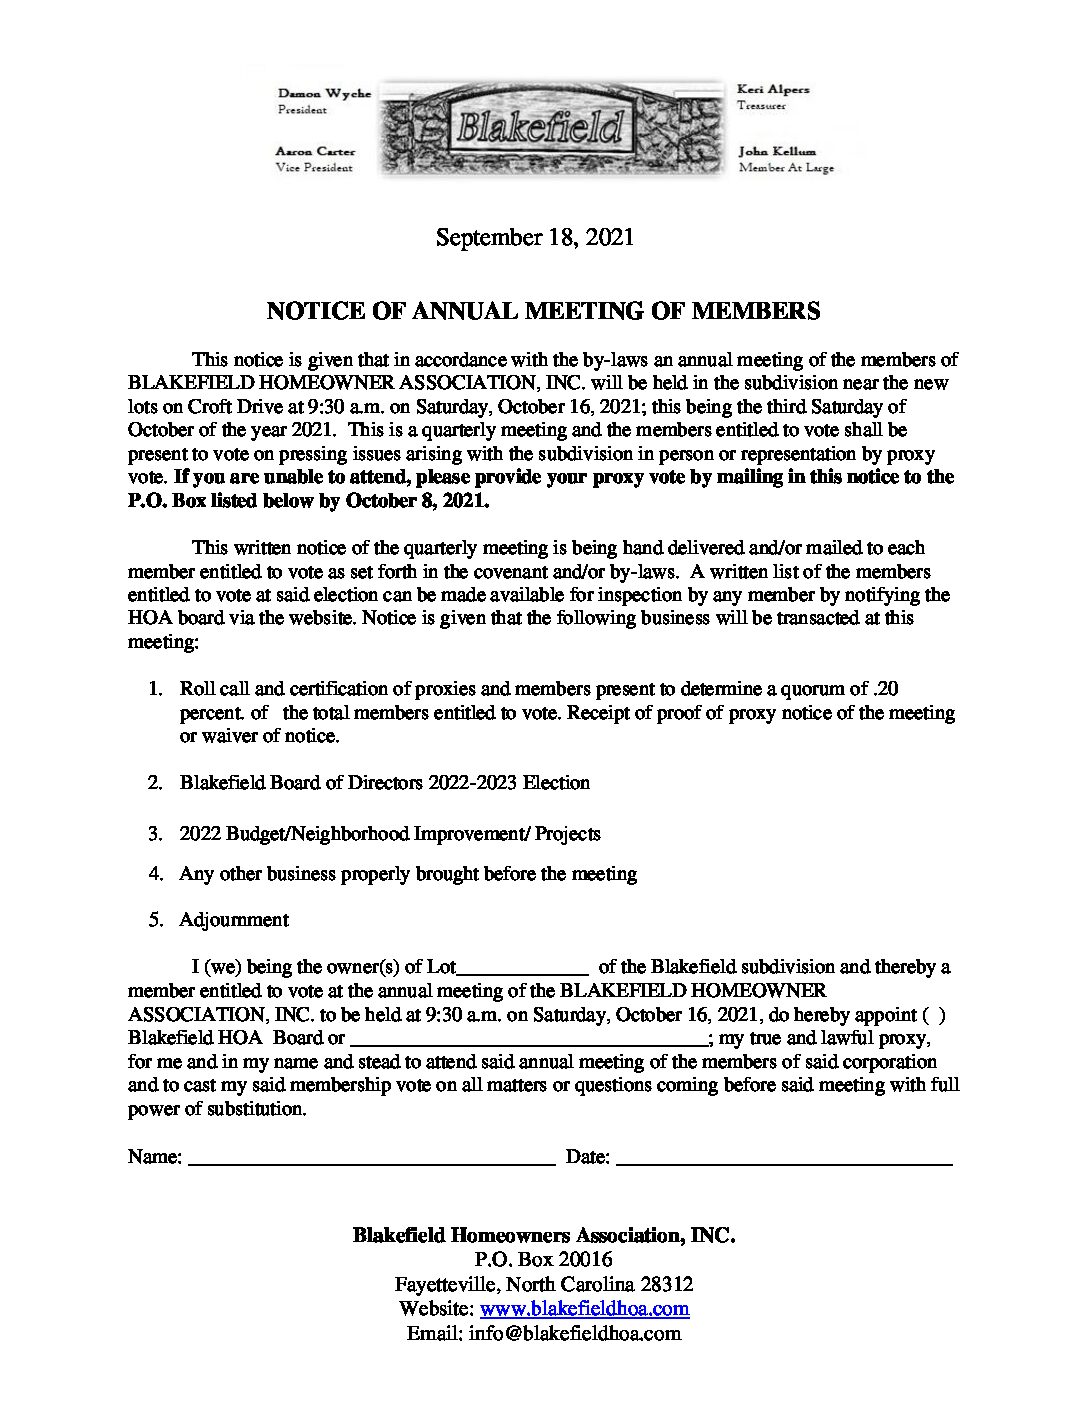 October 16, 2021 Meeting Notice (Proxy)